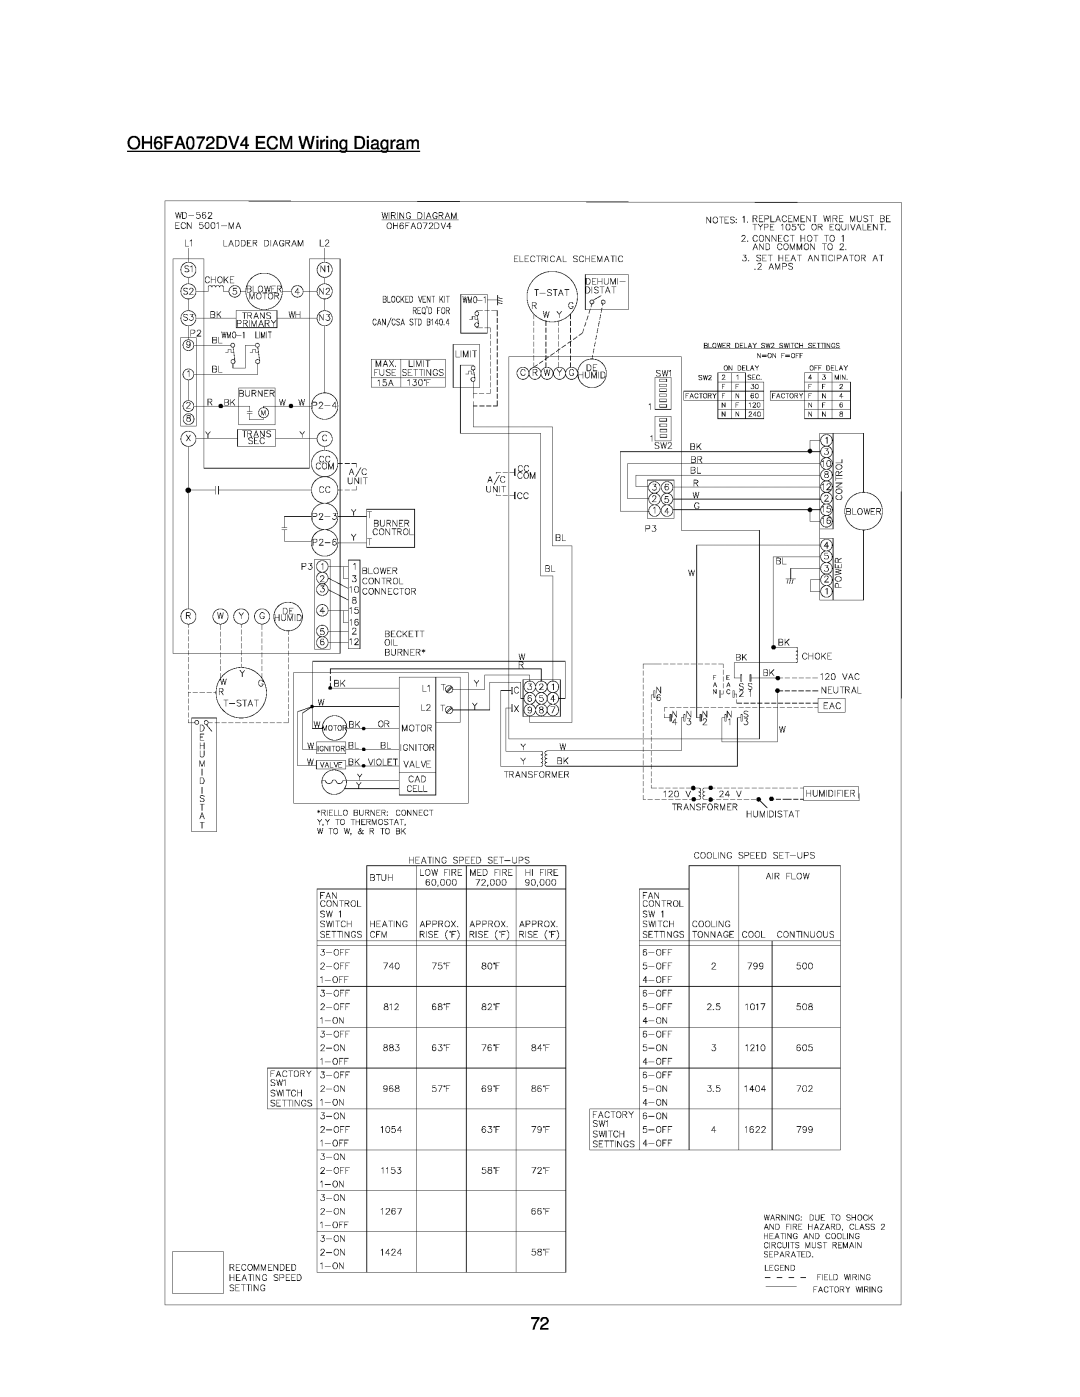 Thermo Products OHFA199DV5R, OHFA199DV5B operation manual OH6FA072DV4 ECM Wiring Diagram 